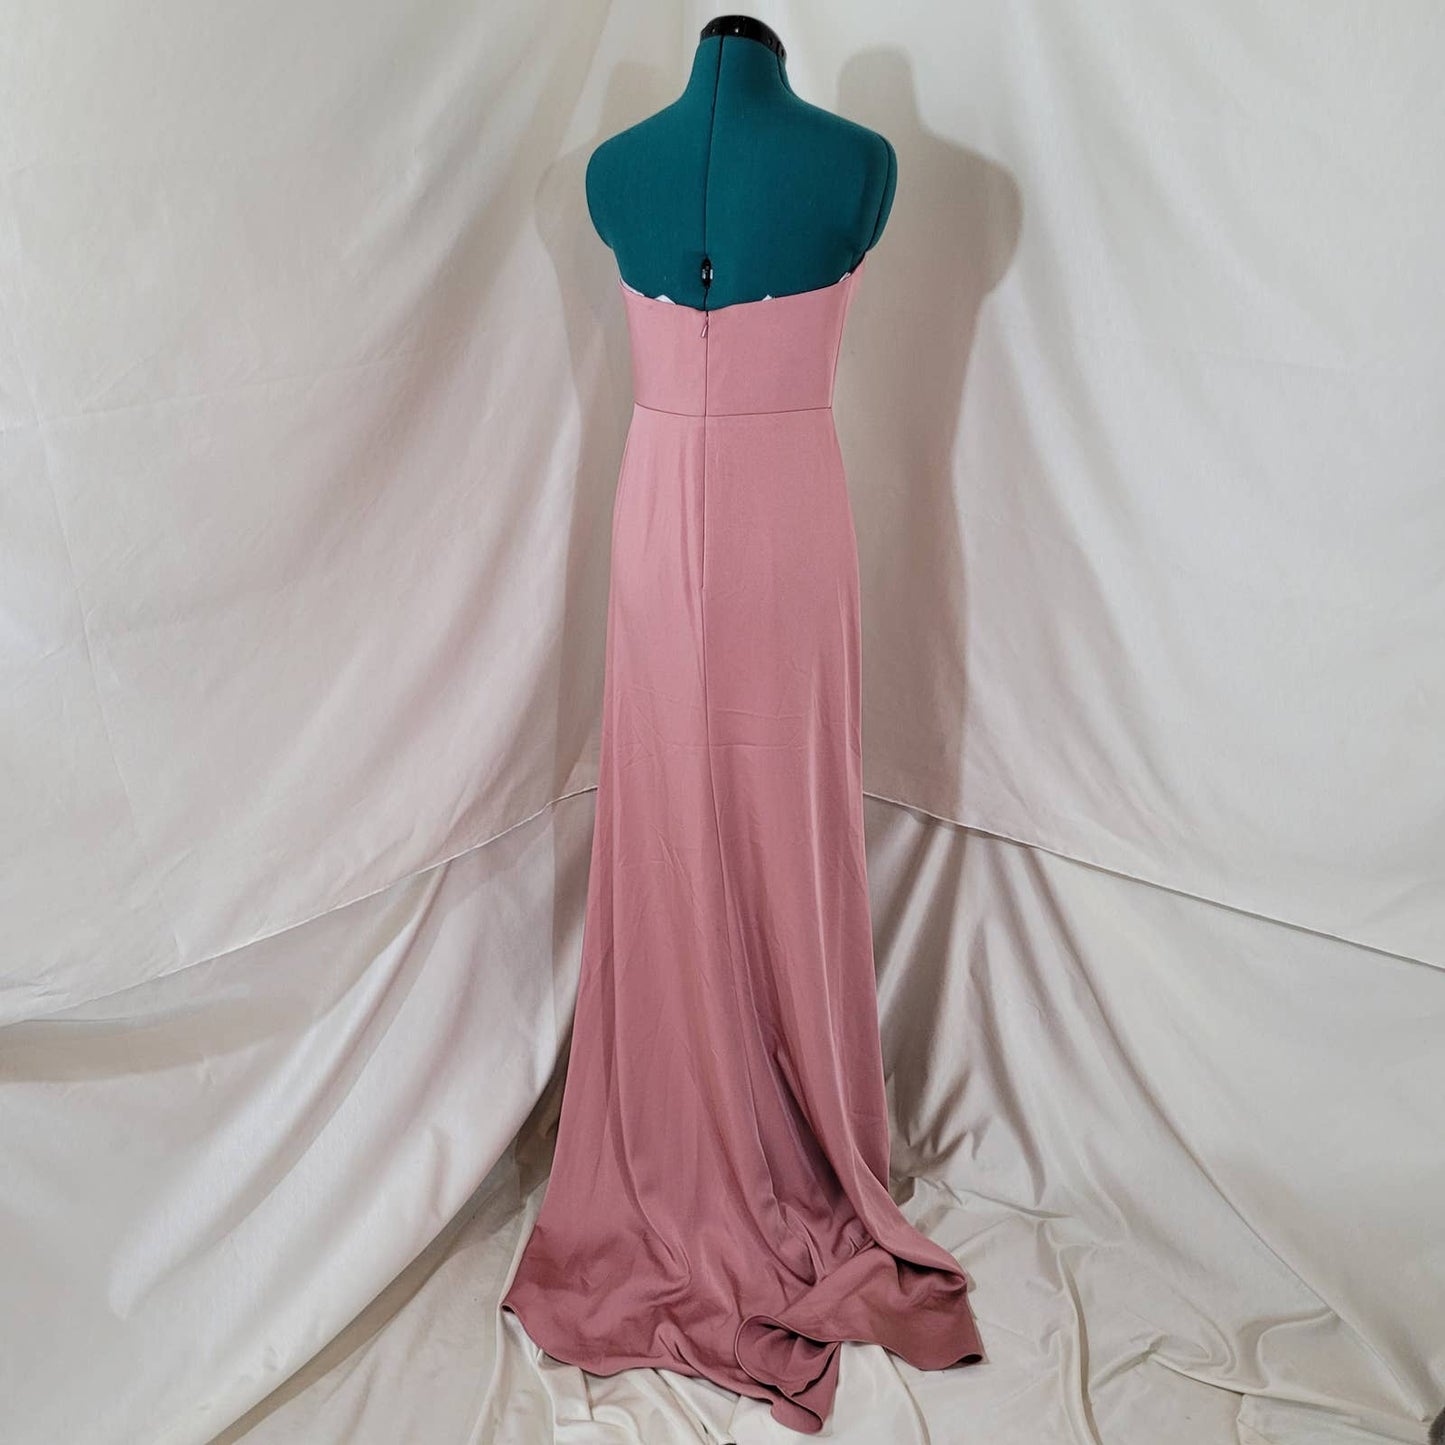 Alyce Paris Blush Pink Satin Strapless Gown Sweetheart Neckline - 2Markita's ClosetAlyce Paris